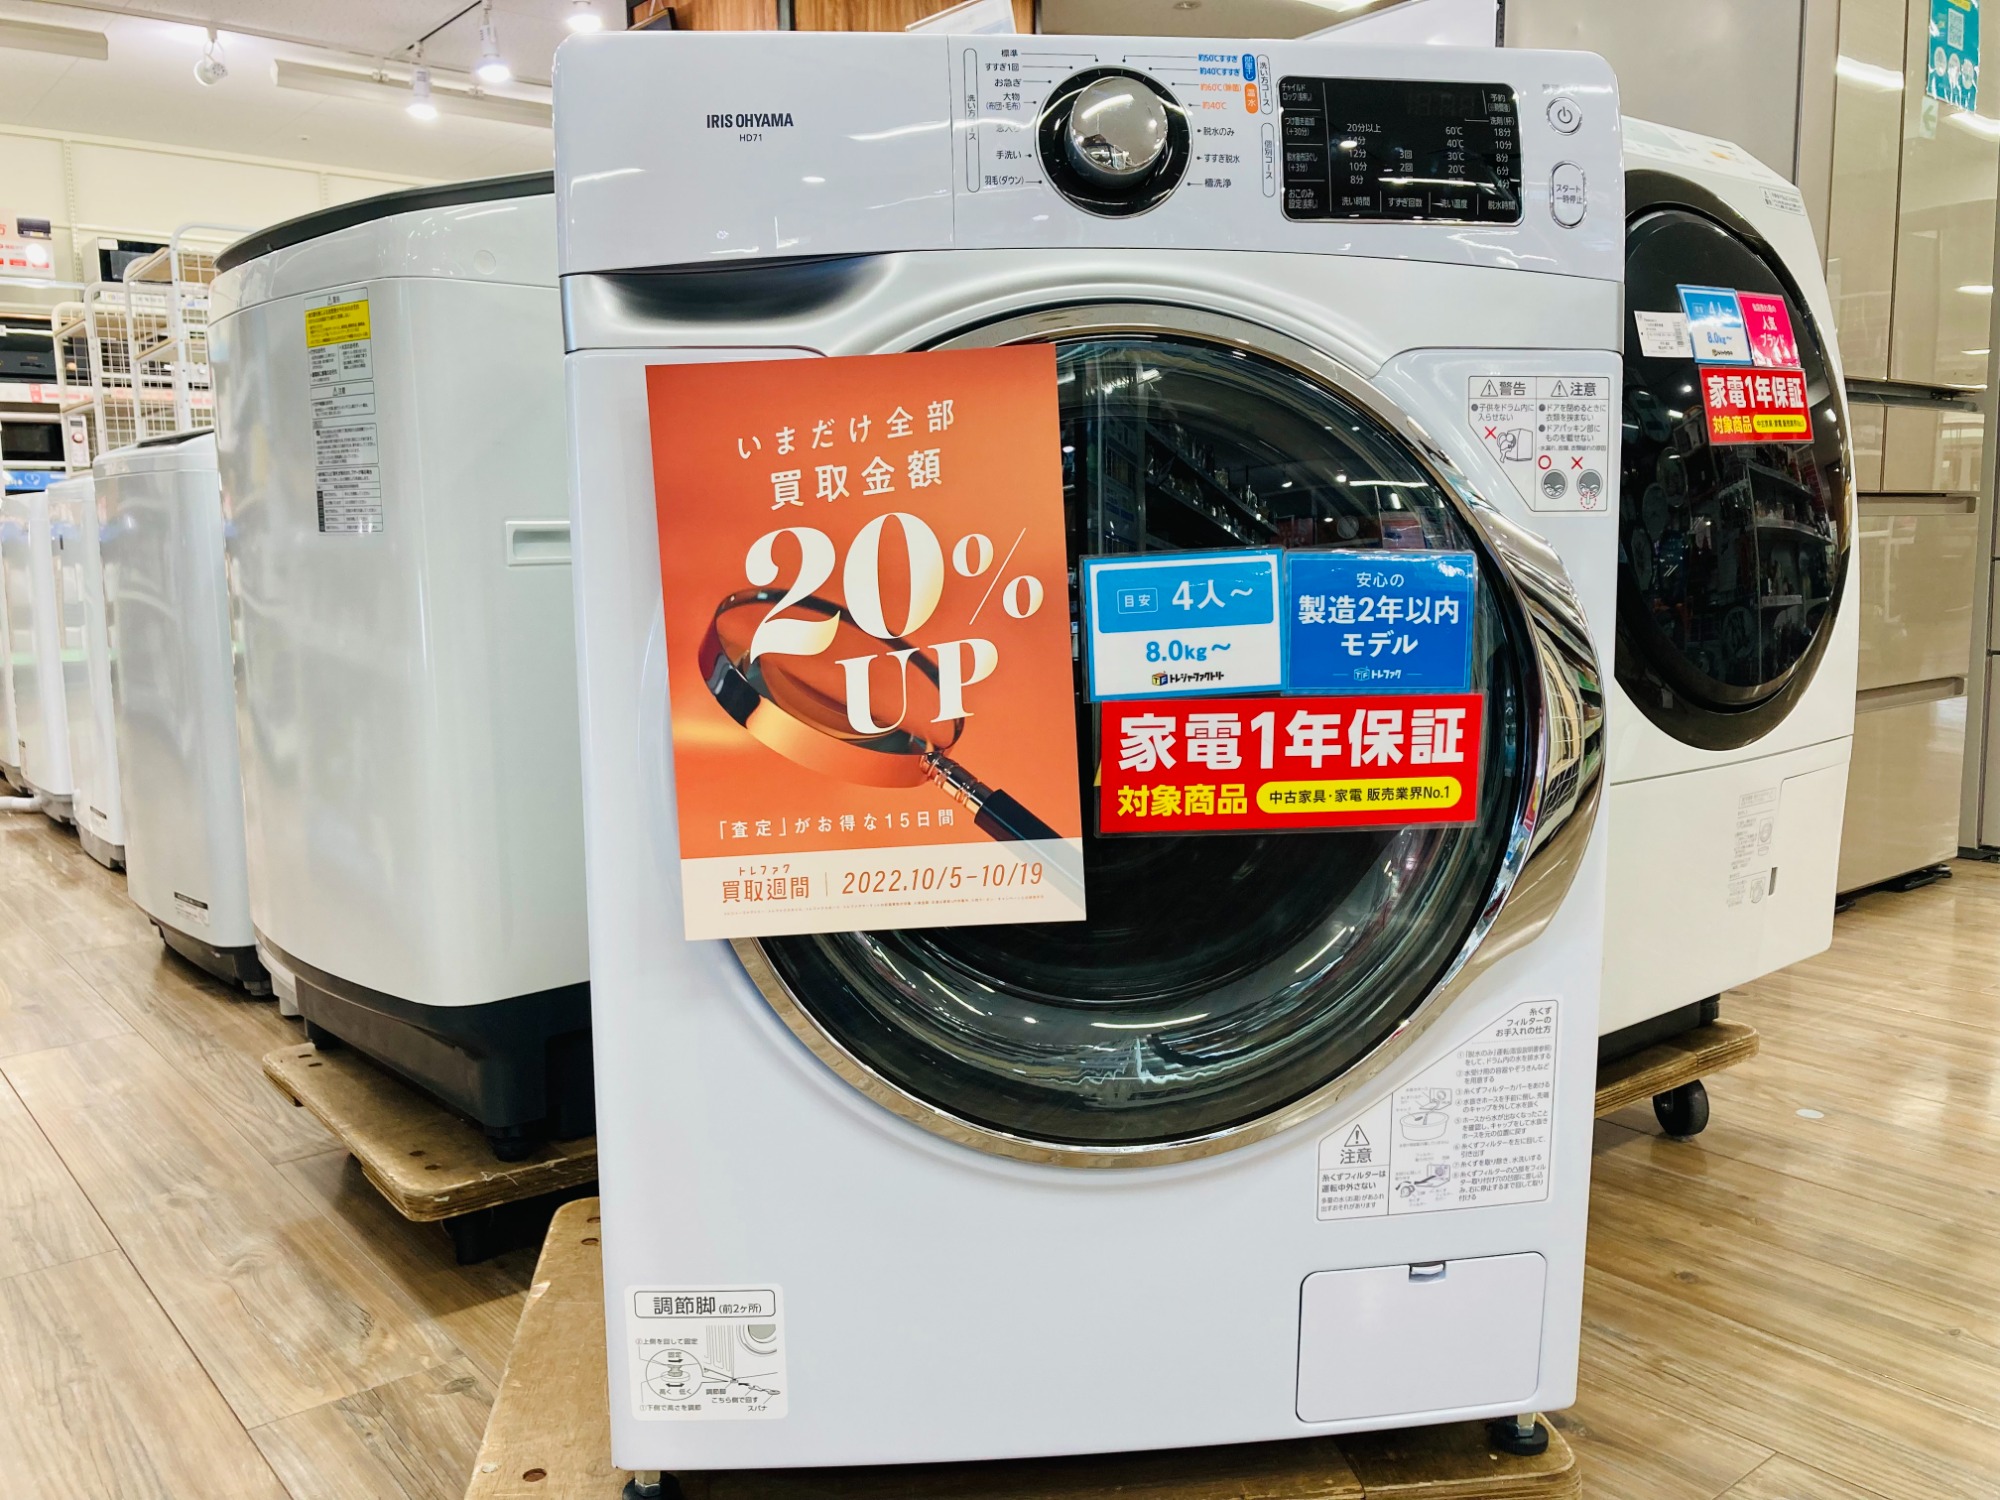 IRIS OHYAMA(アイリスオーヤマ)のドラム式洗濯機が買取入荷しました